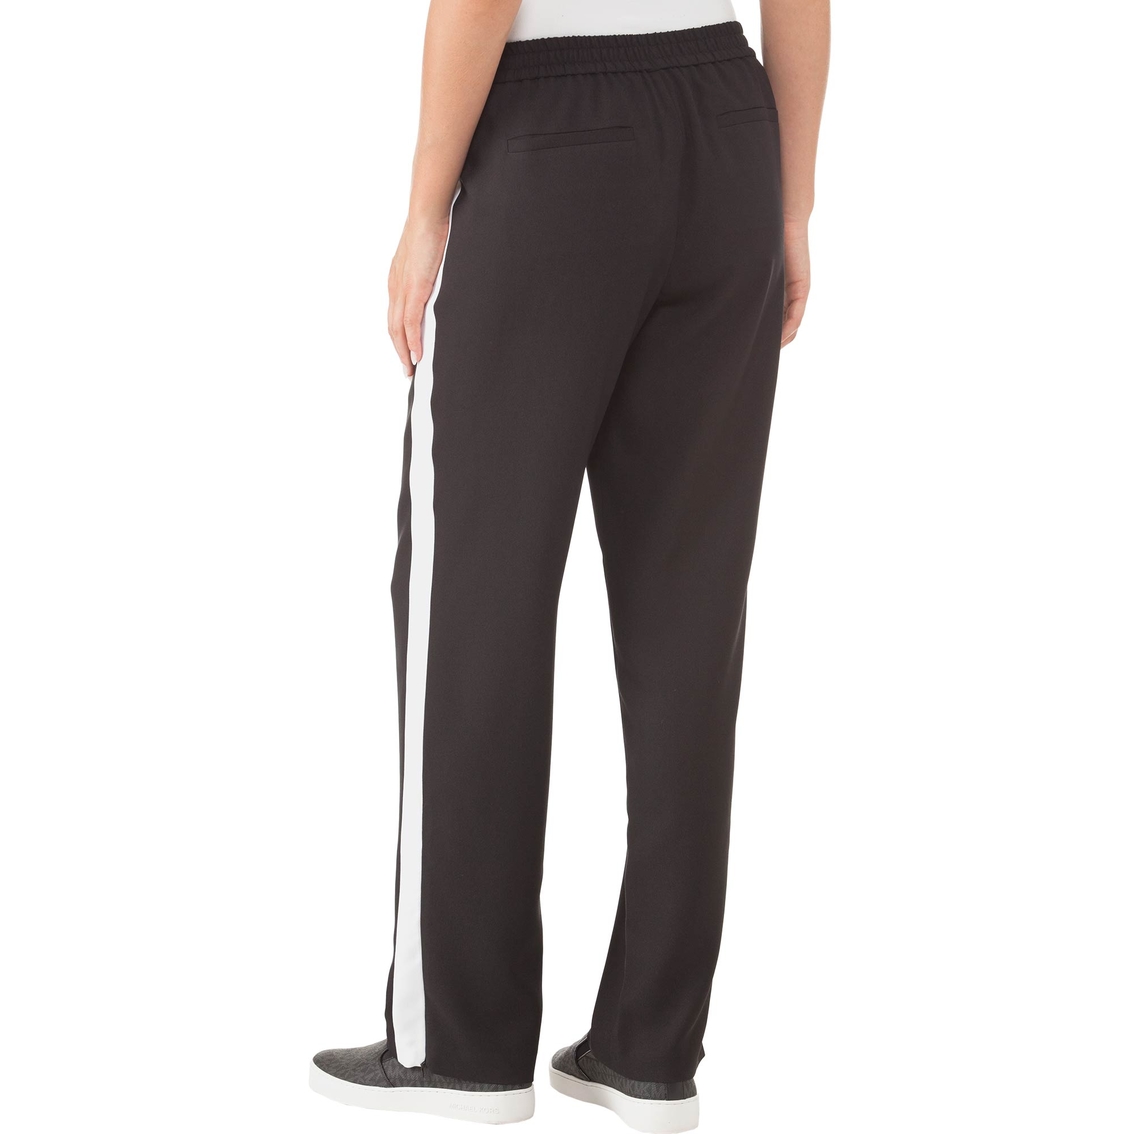 Michael Kors Sport Stripe Track Pants - Image 2 of 4